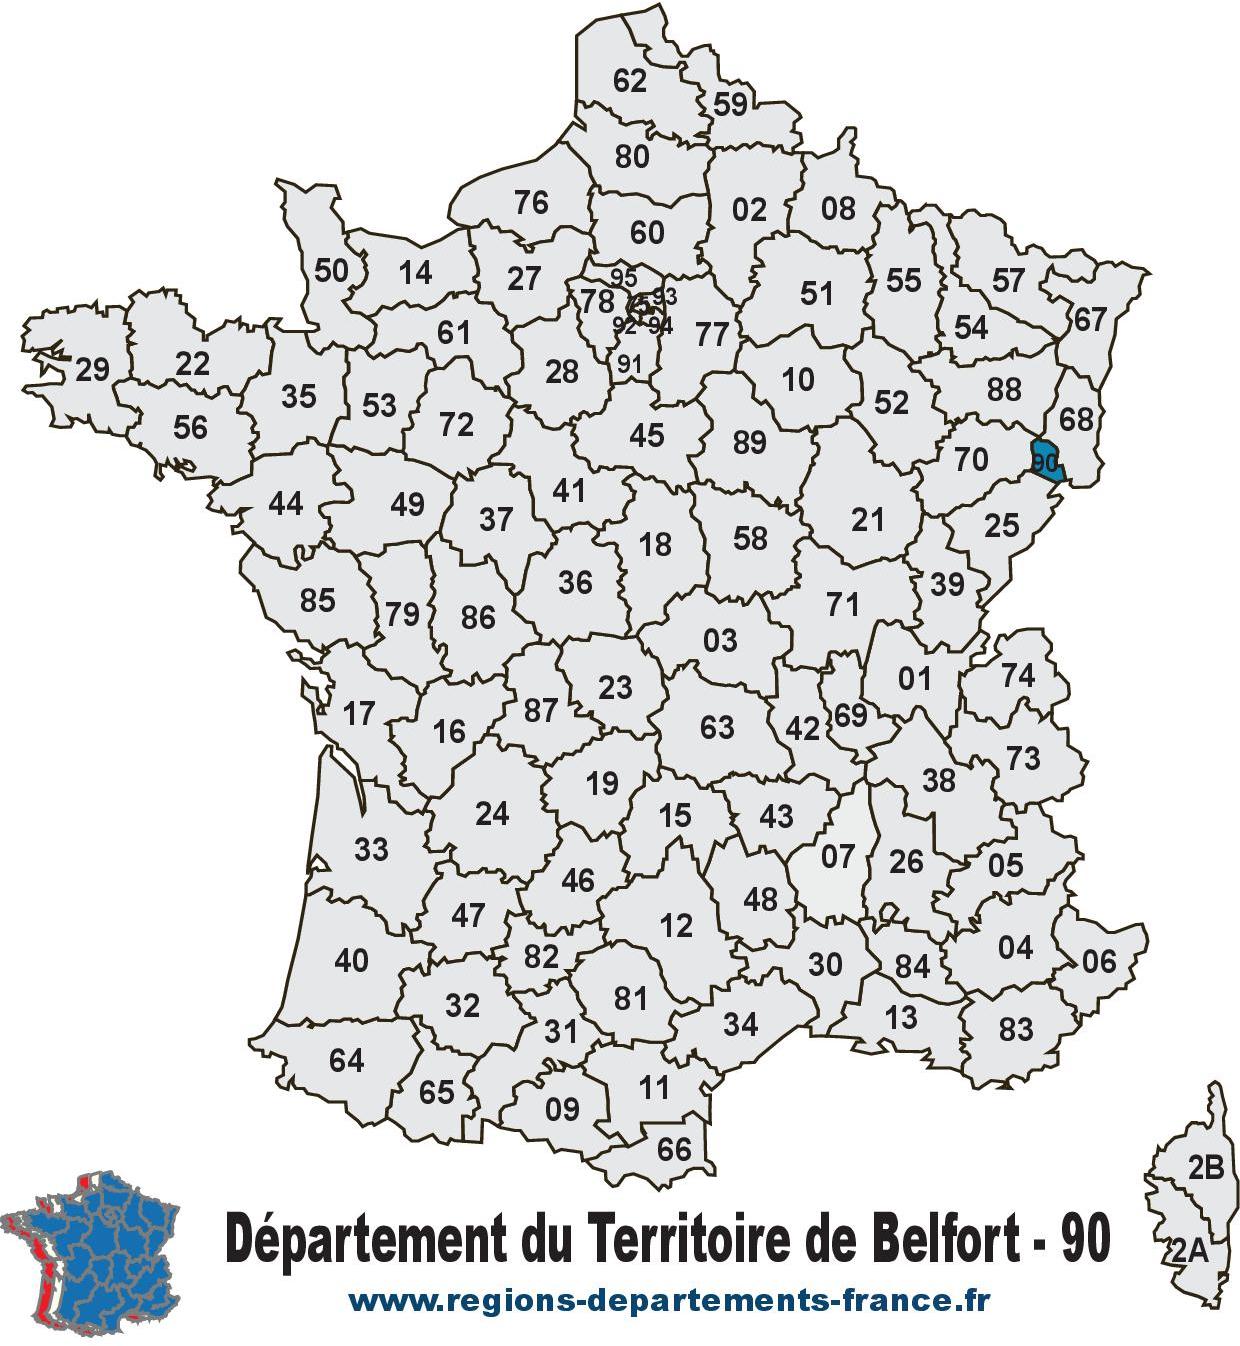 Départements du Territoire de Belfort (90) et localisation.